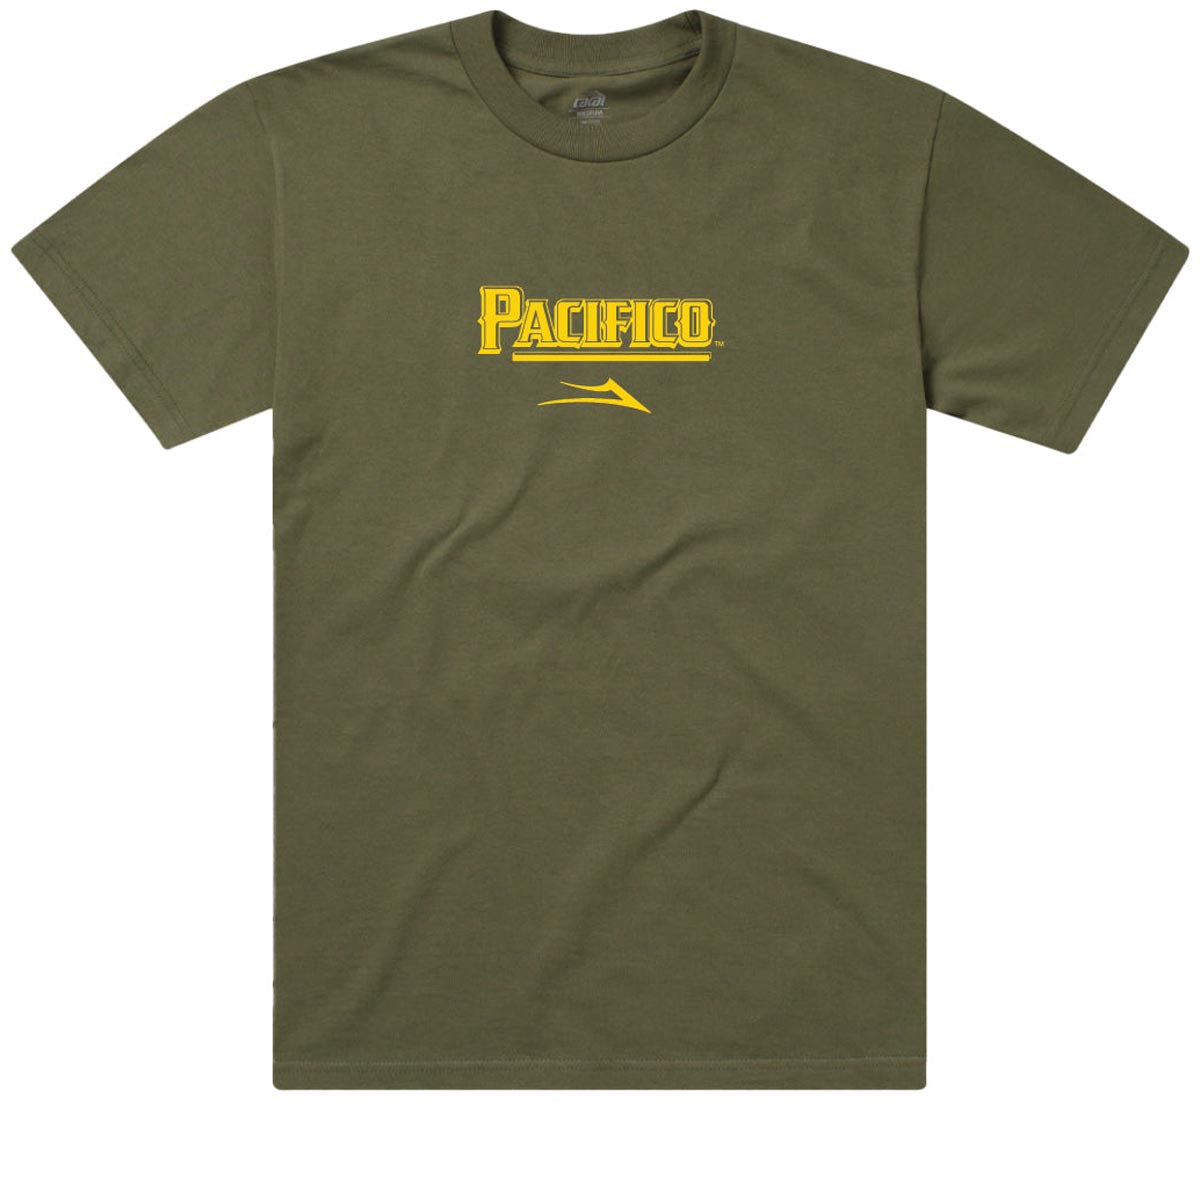 Lakai x Pacifico T-Shirt - Olive image 1